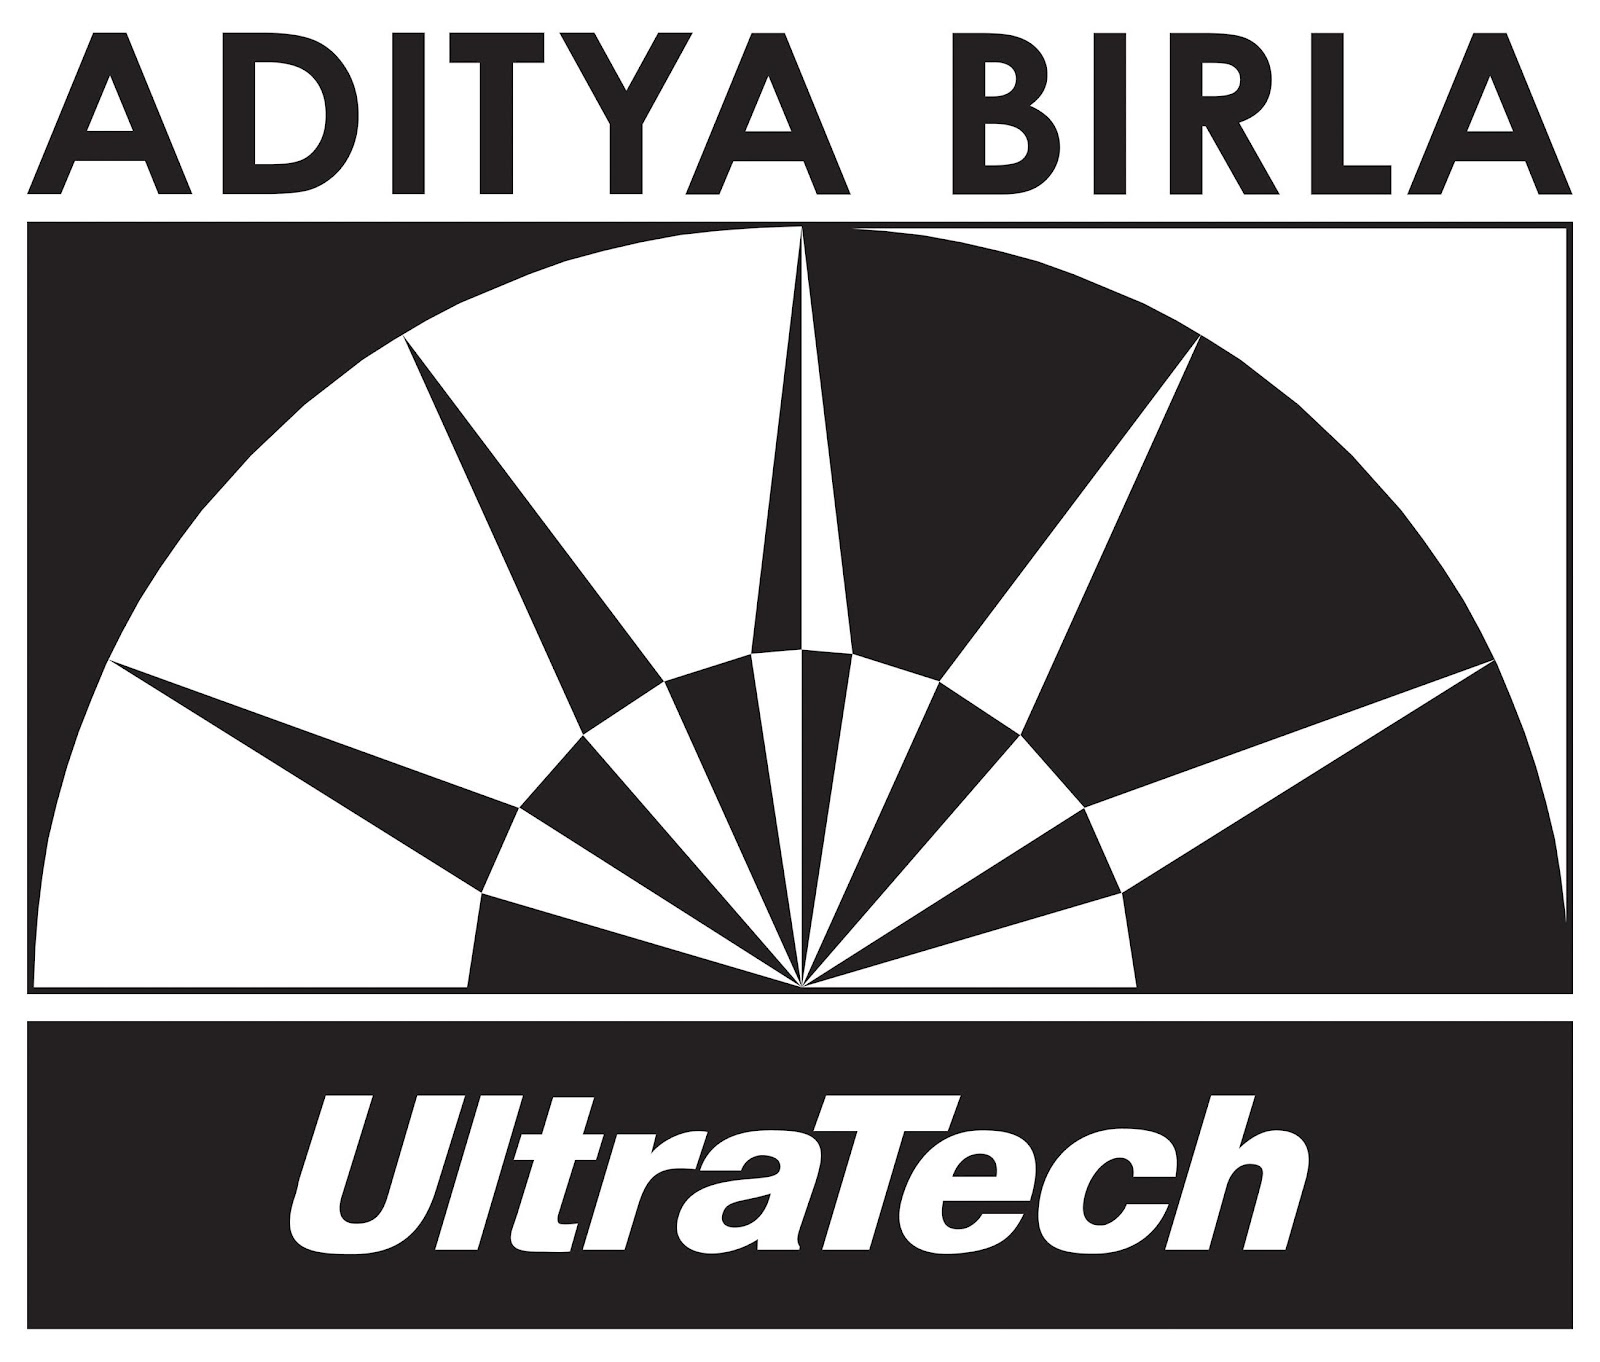 Ultratech Cement Logo logo png download